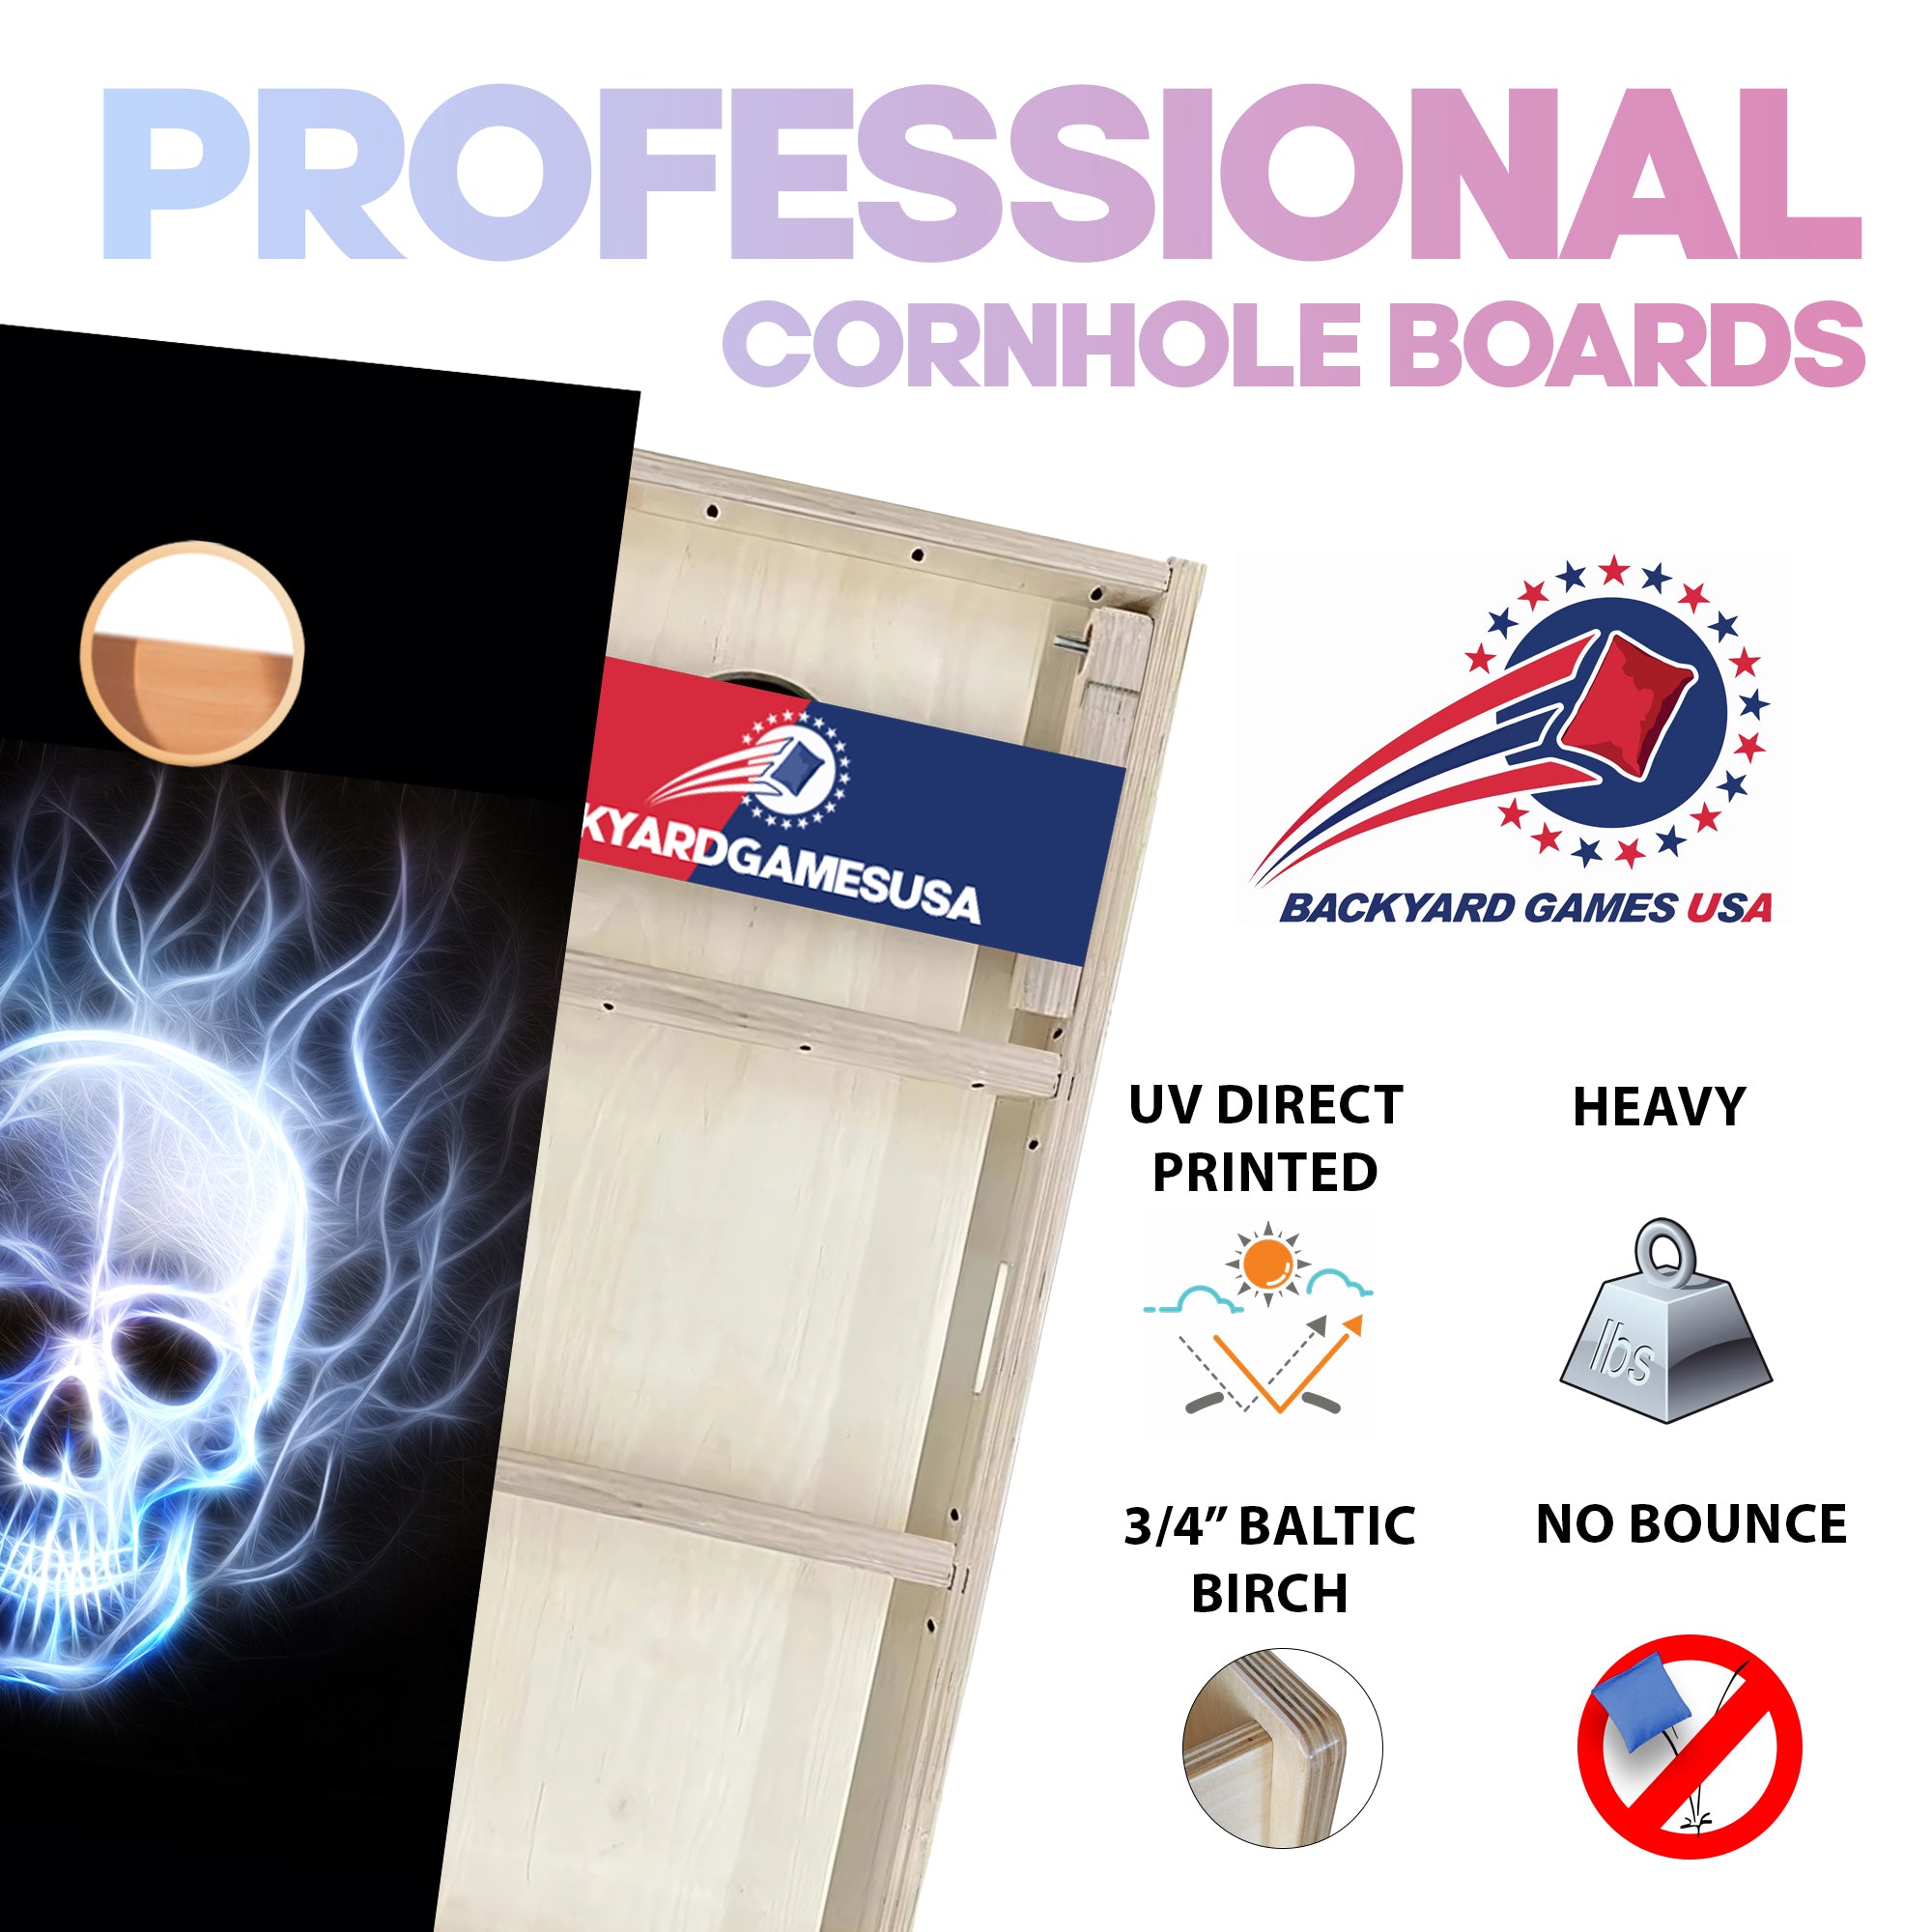 Windy Skull Professional Cornhole Boards